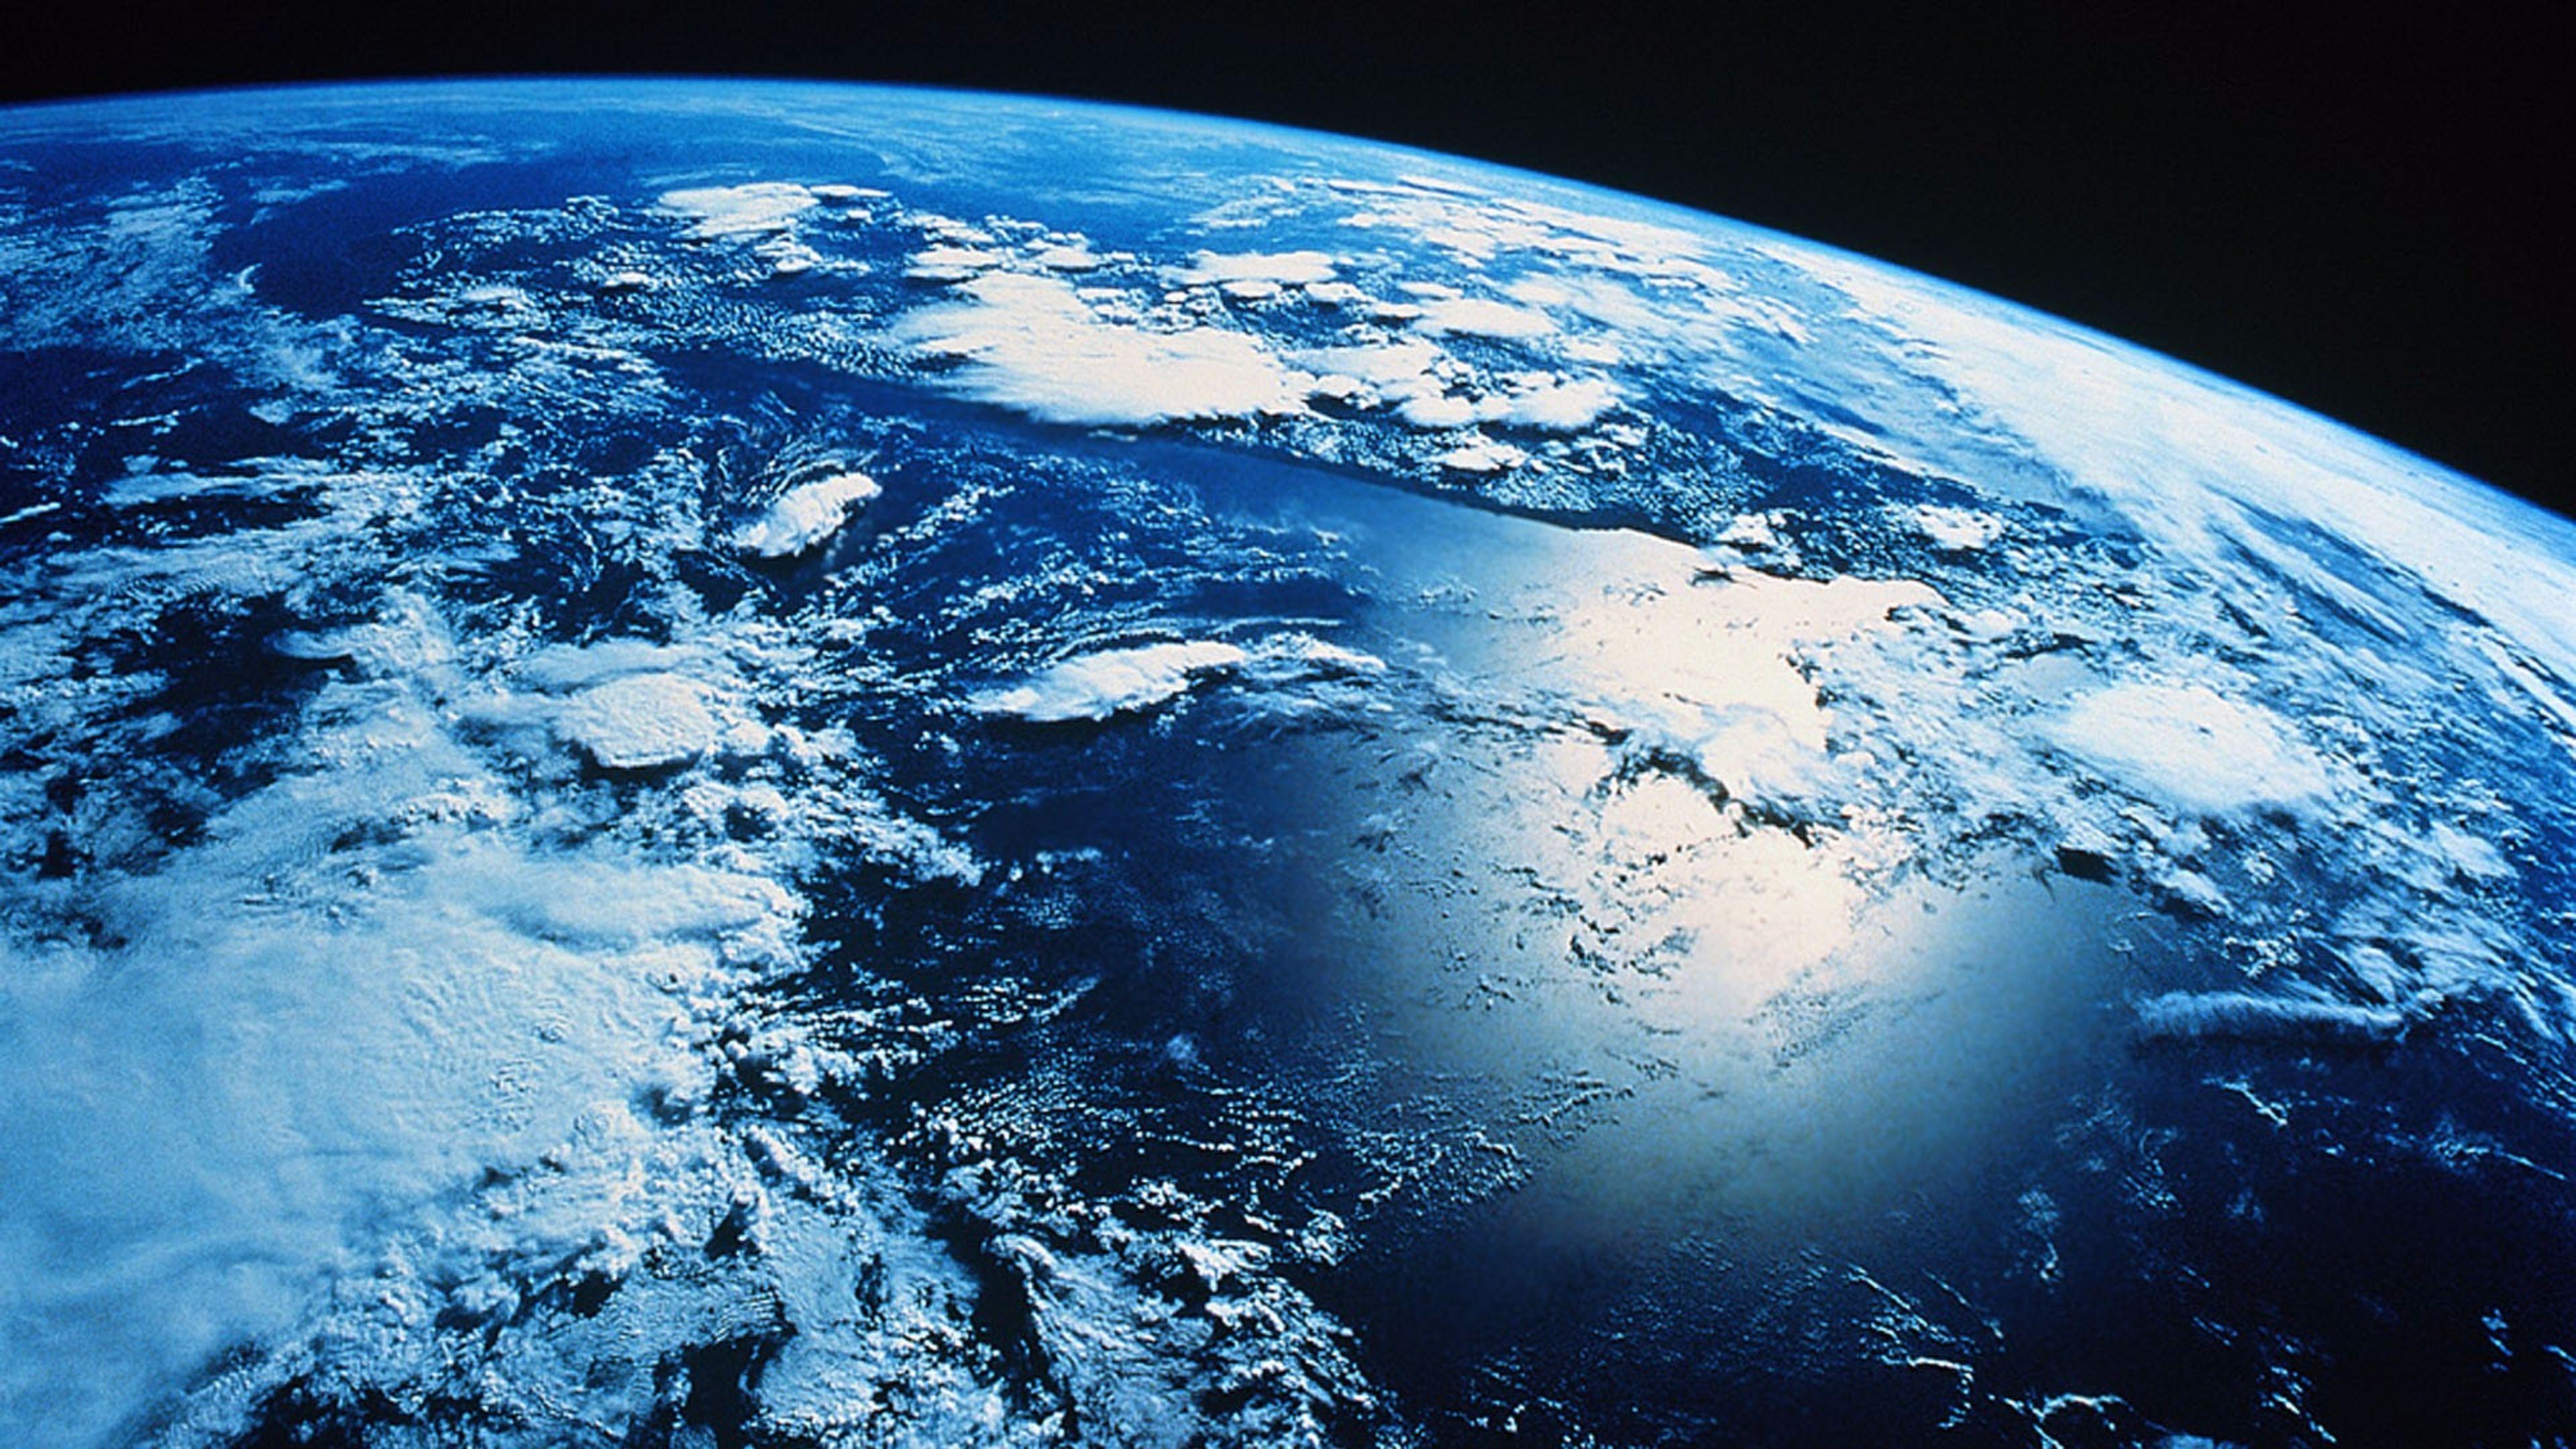 Dunya ray xcvi. Вид земли из космоса. О земле и космосе. Земной шар вид из космоса. Красивый вид из космоса.